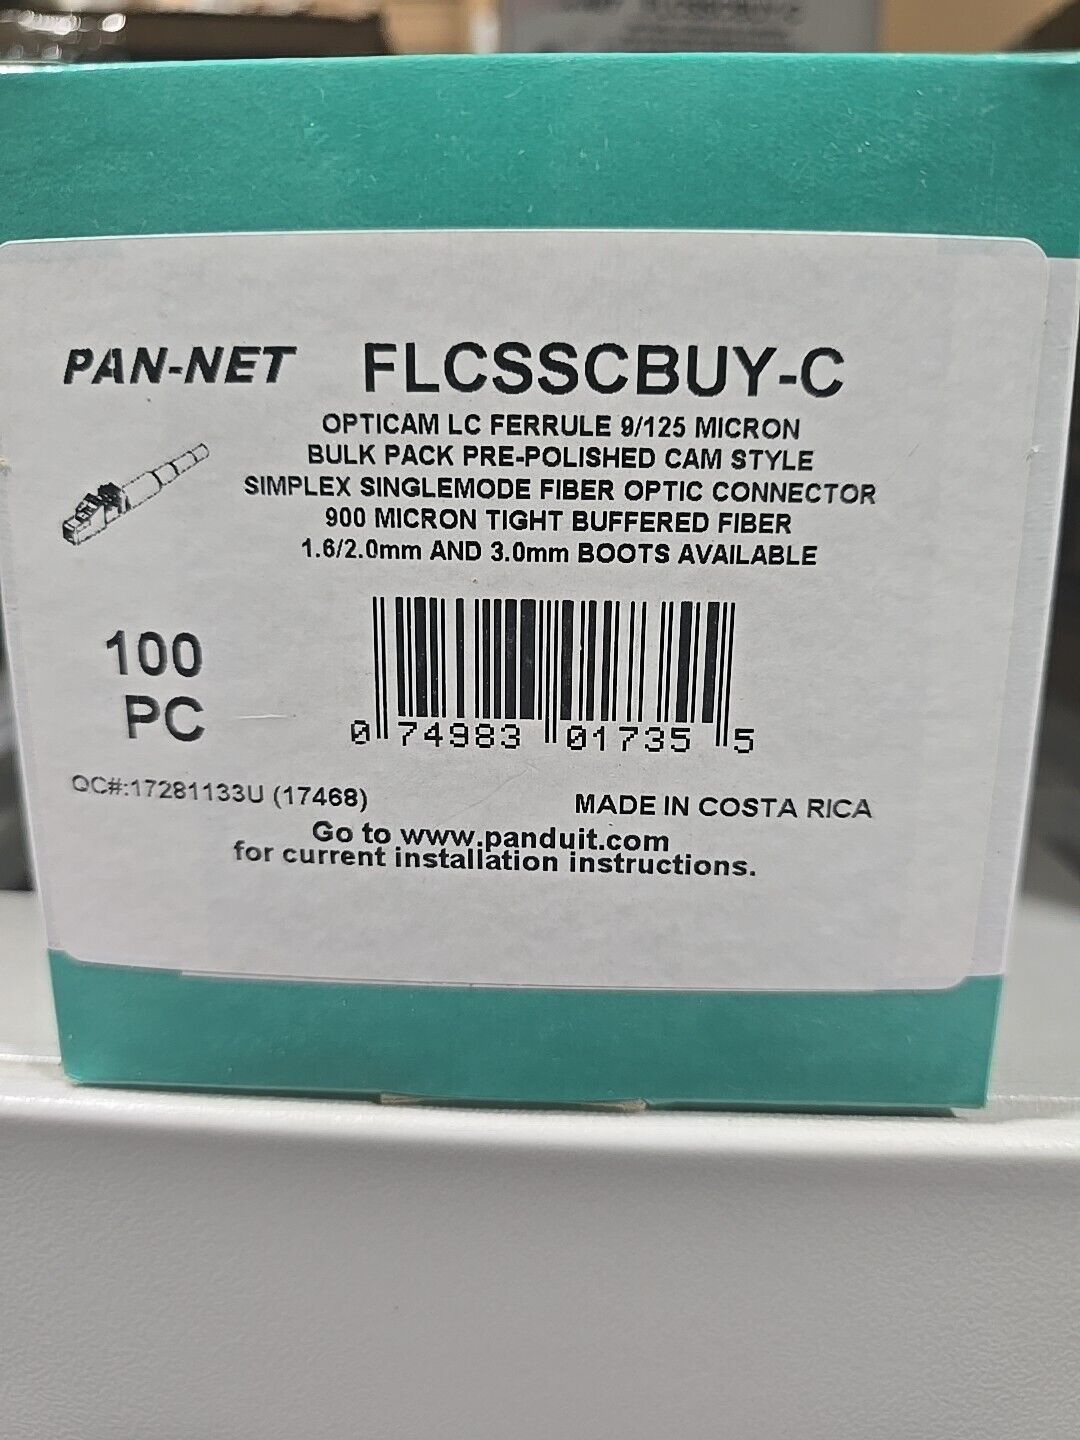 Box of 100 Panduit Fiber Optic FLCSSCBUY-C New Ships Free